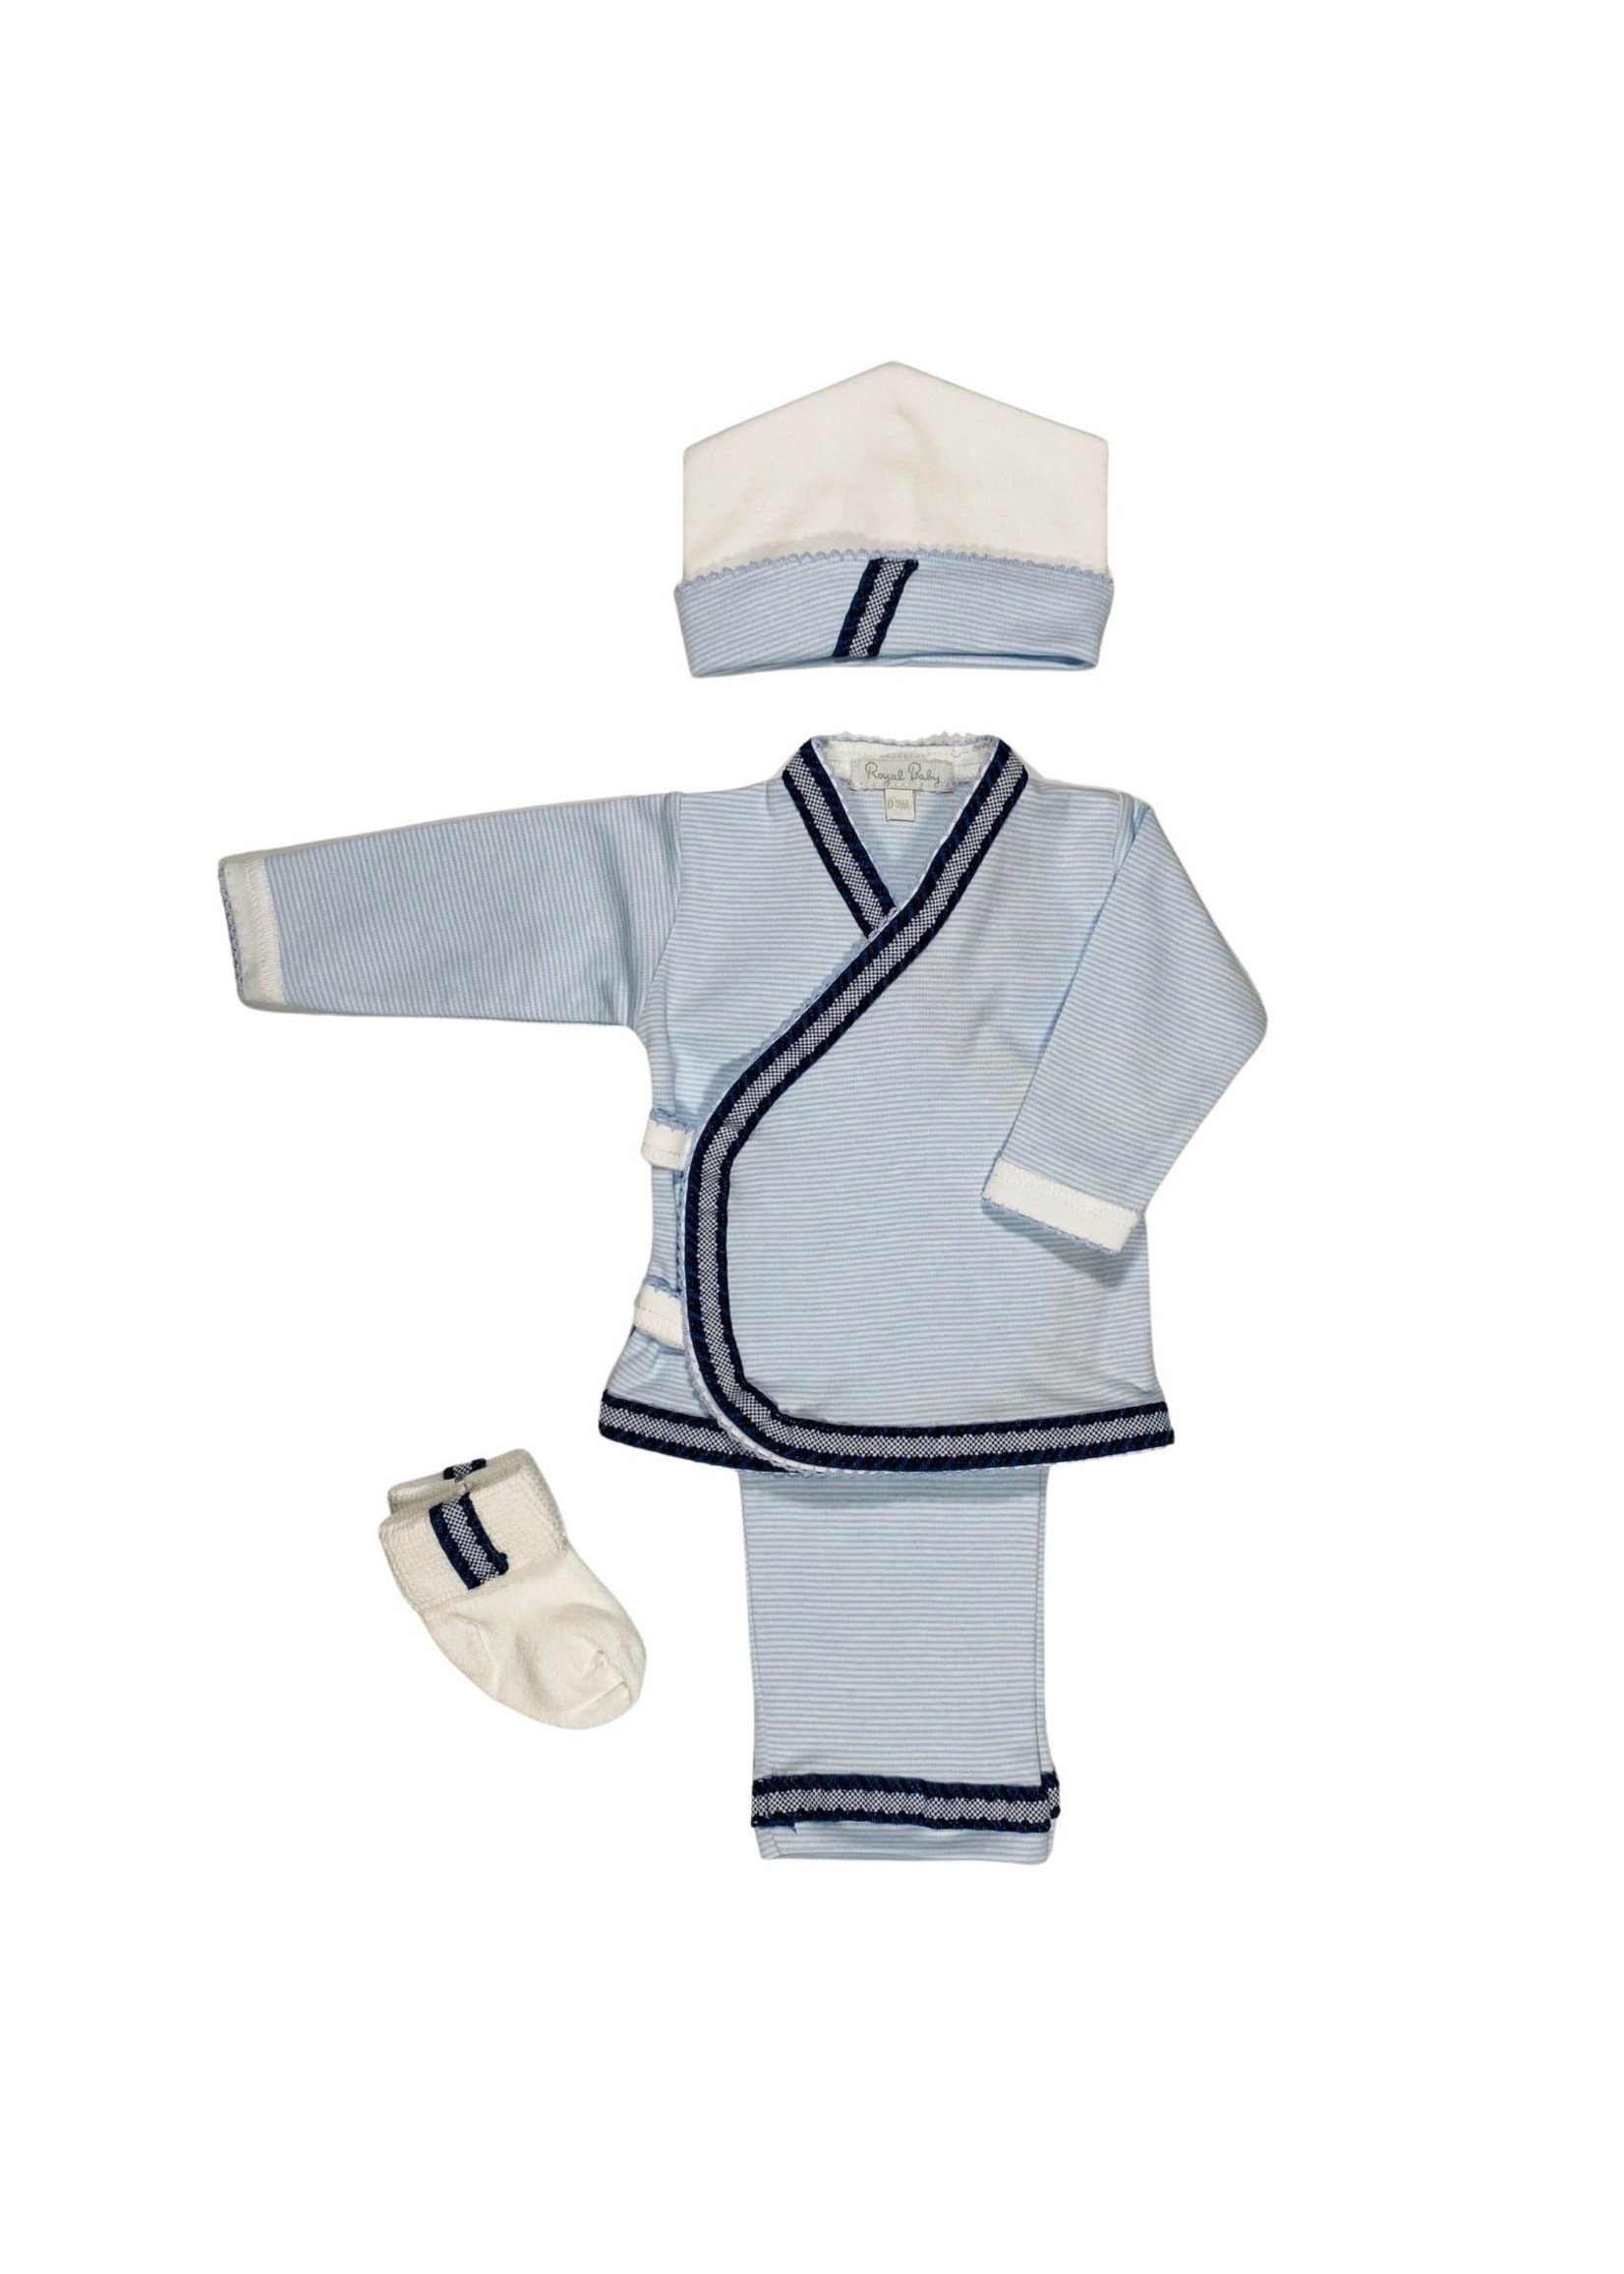 Royal Baby Royal Baby Navy Check Tweed Trim Newborn Socks